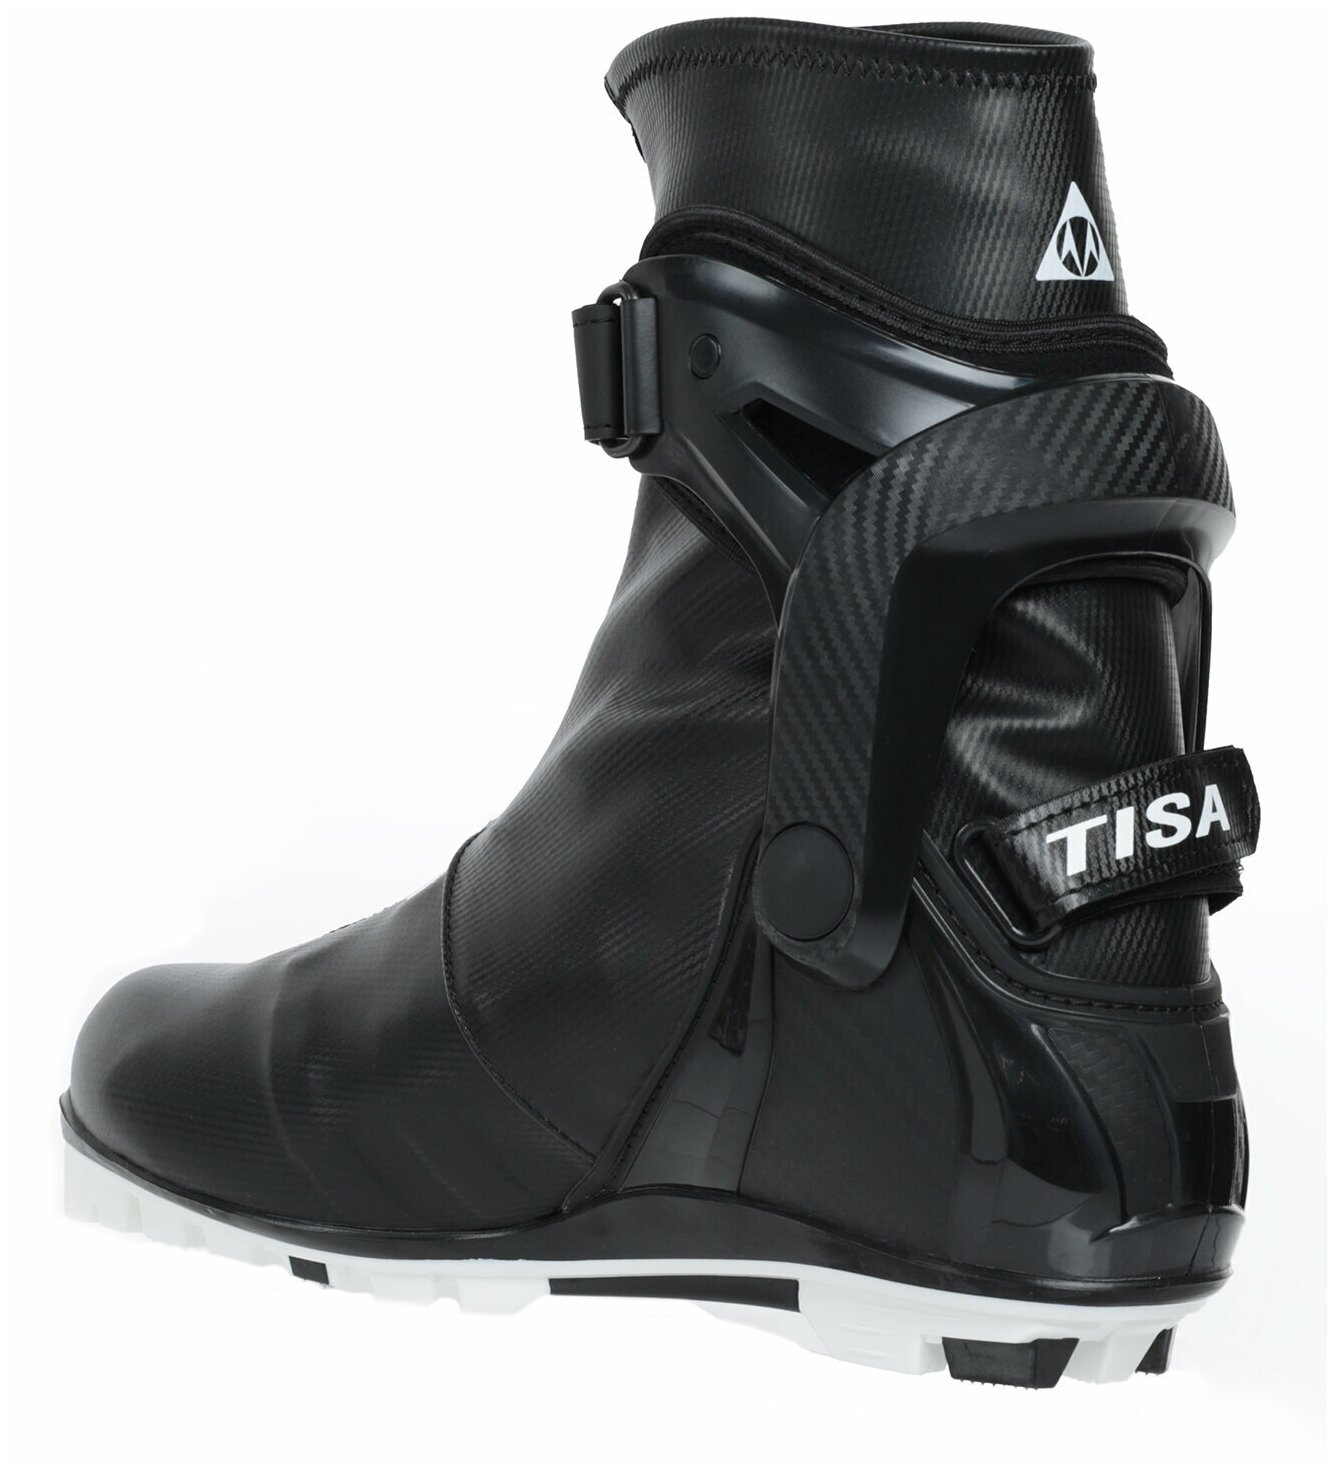 Лыжные ботинки TISA NNN Pro Skate (S81020) (черный/серый) (43)